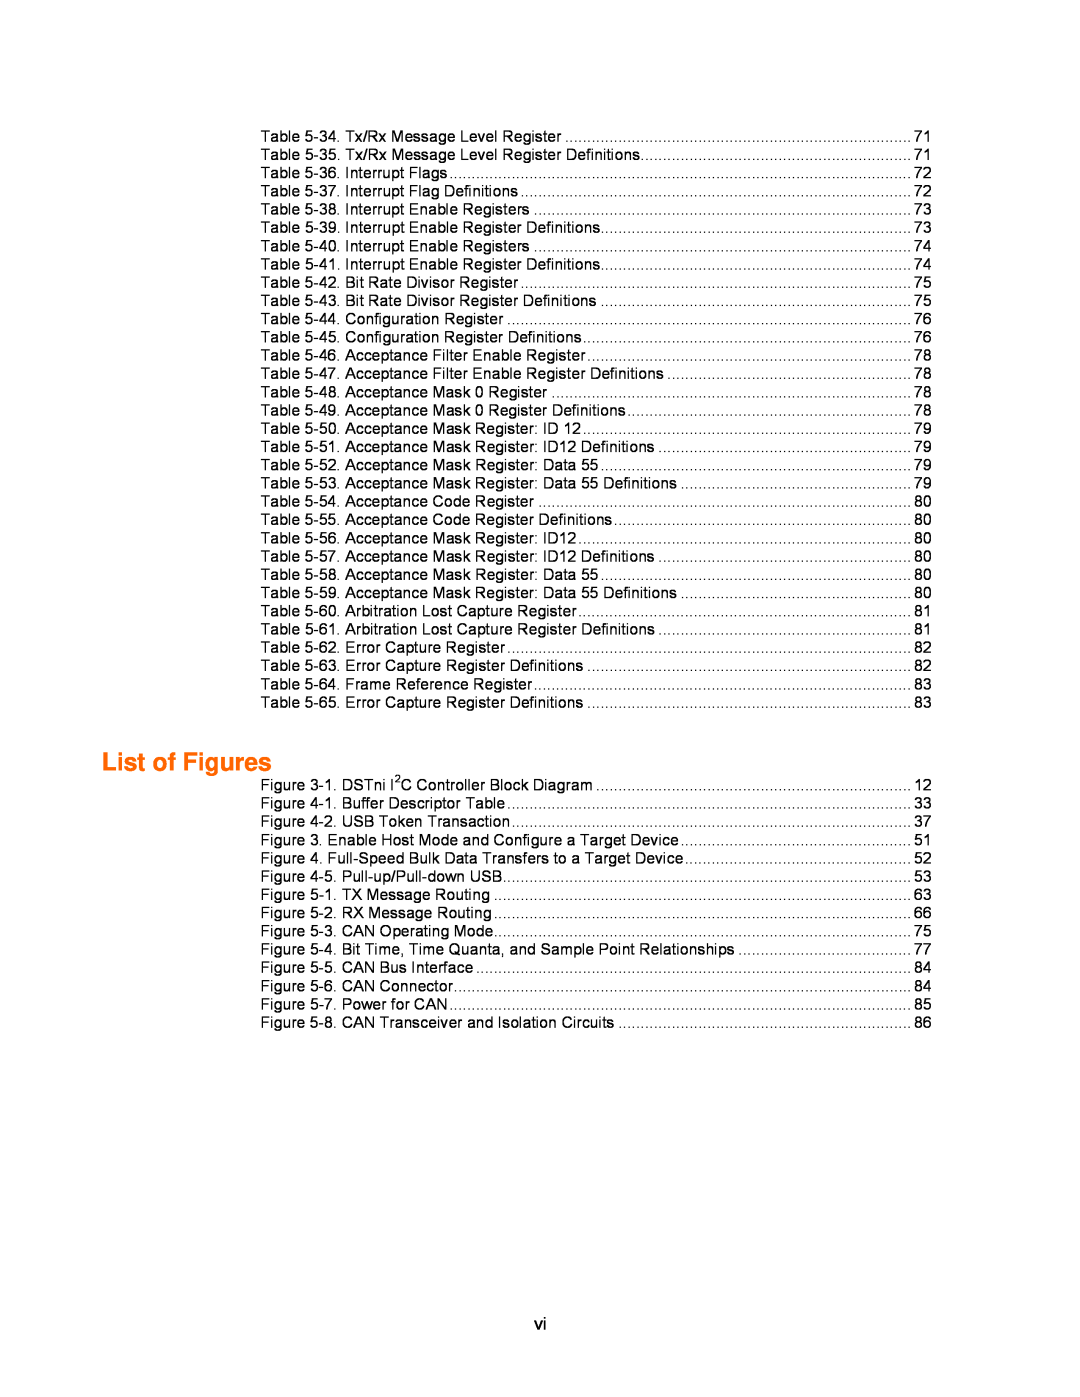 Lantronix DSTni-EX manual List of Figures 